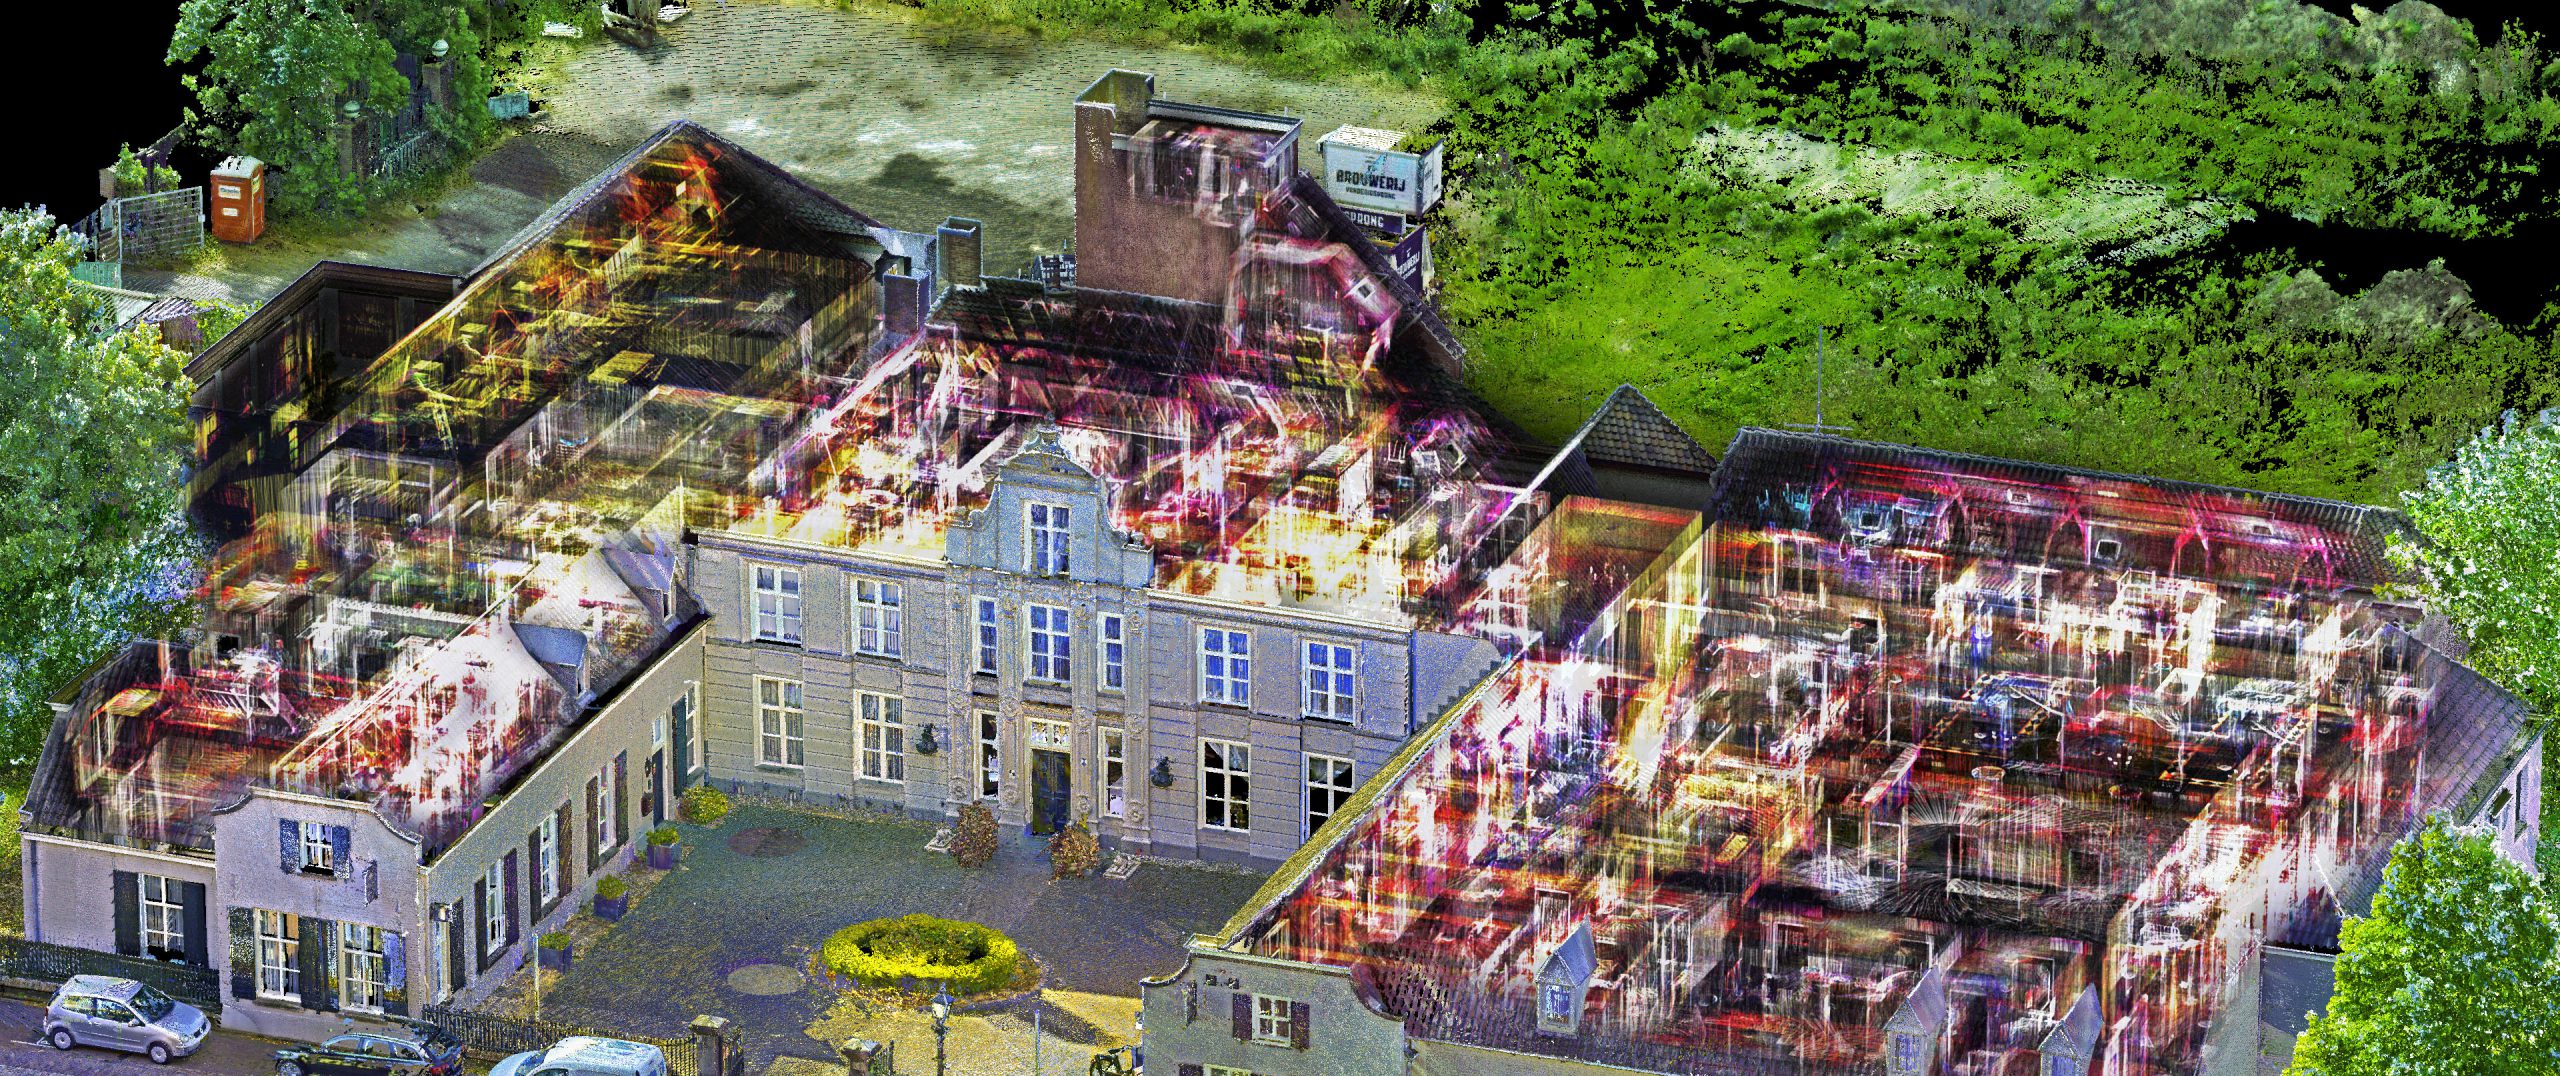 Hof van Solms te Oirschot 3D ingescand door Coenradie